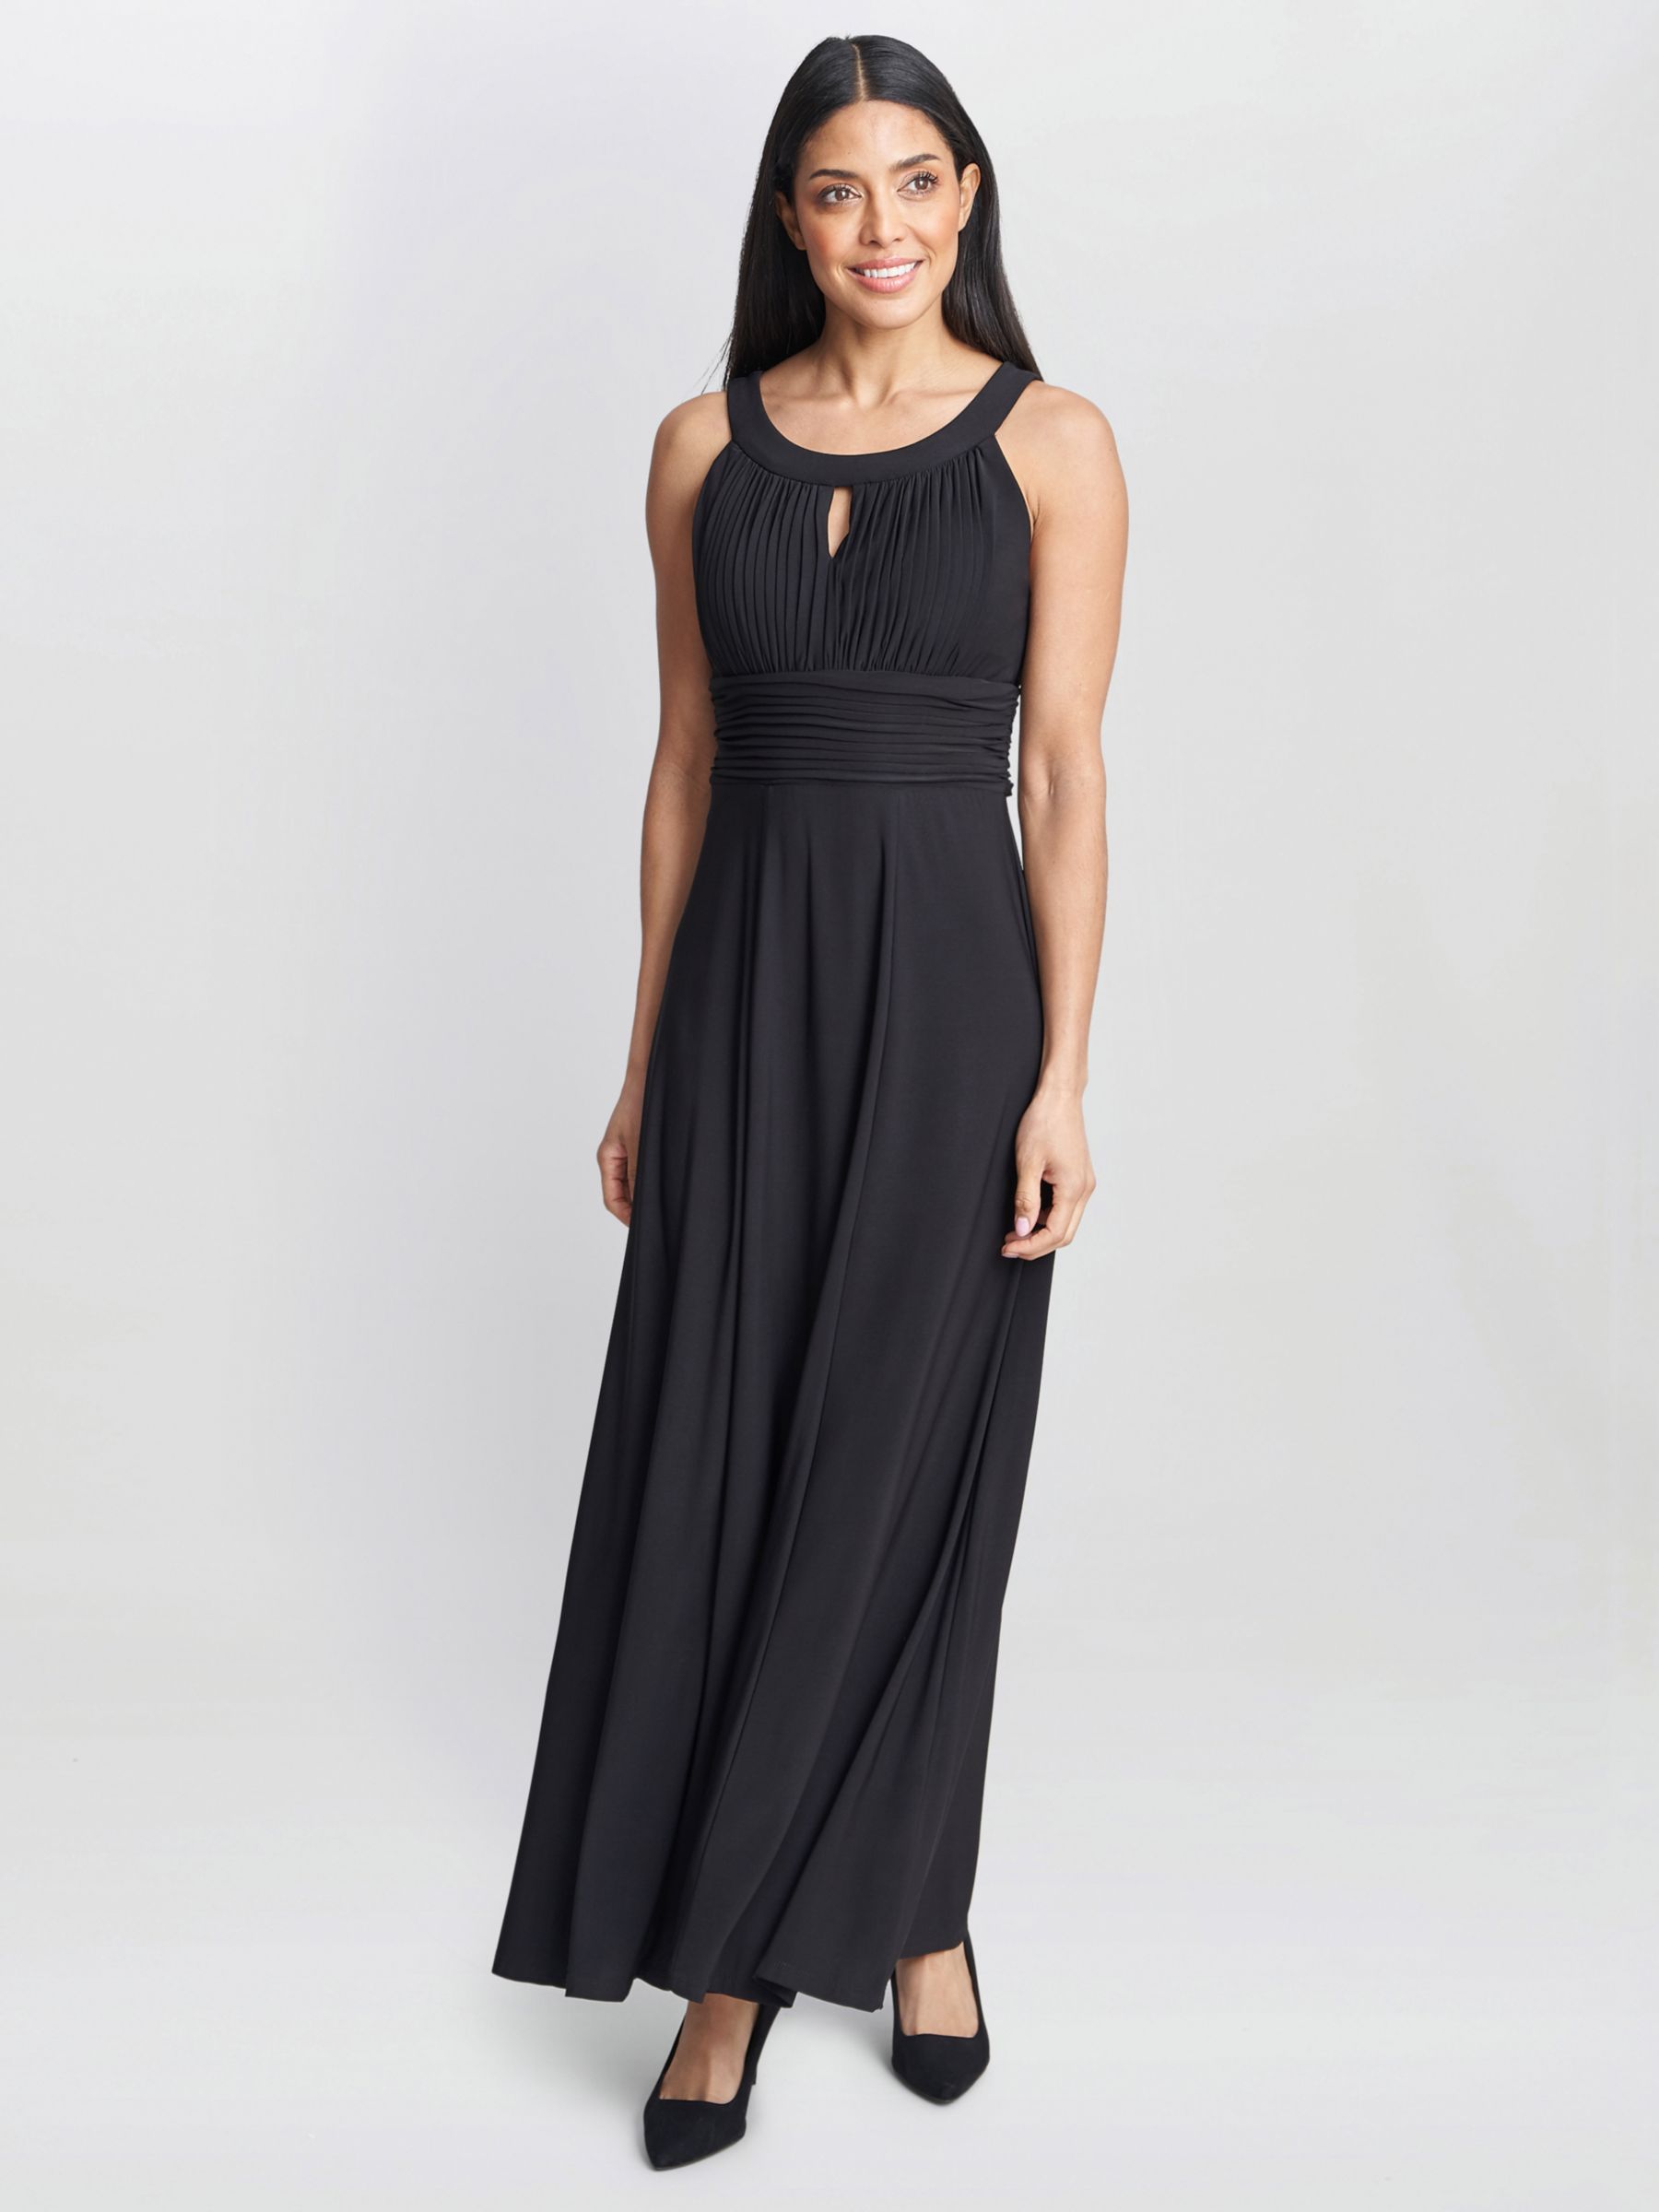 Gina Bacconi Kelsie Ruched Maxi Dress, Black at John Lewis & Partners